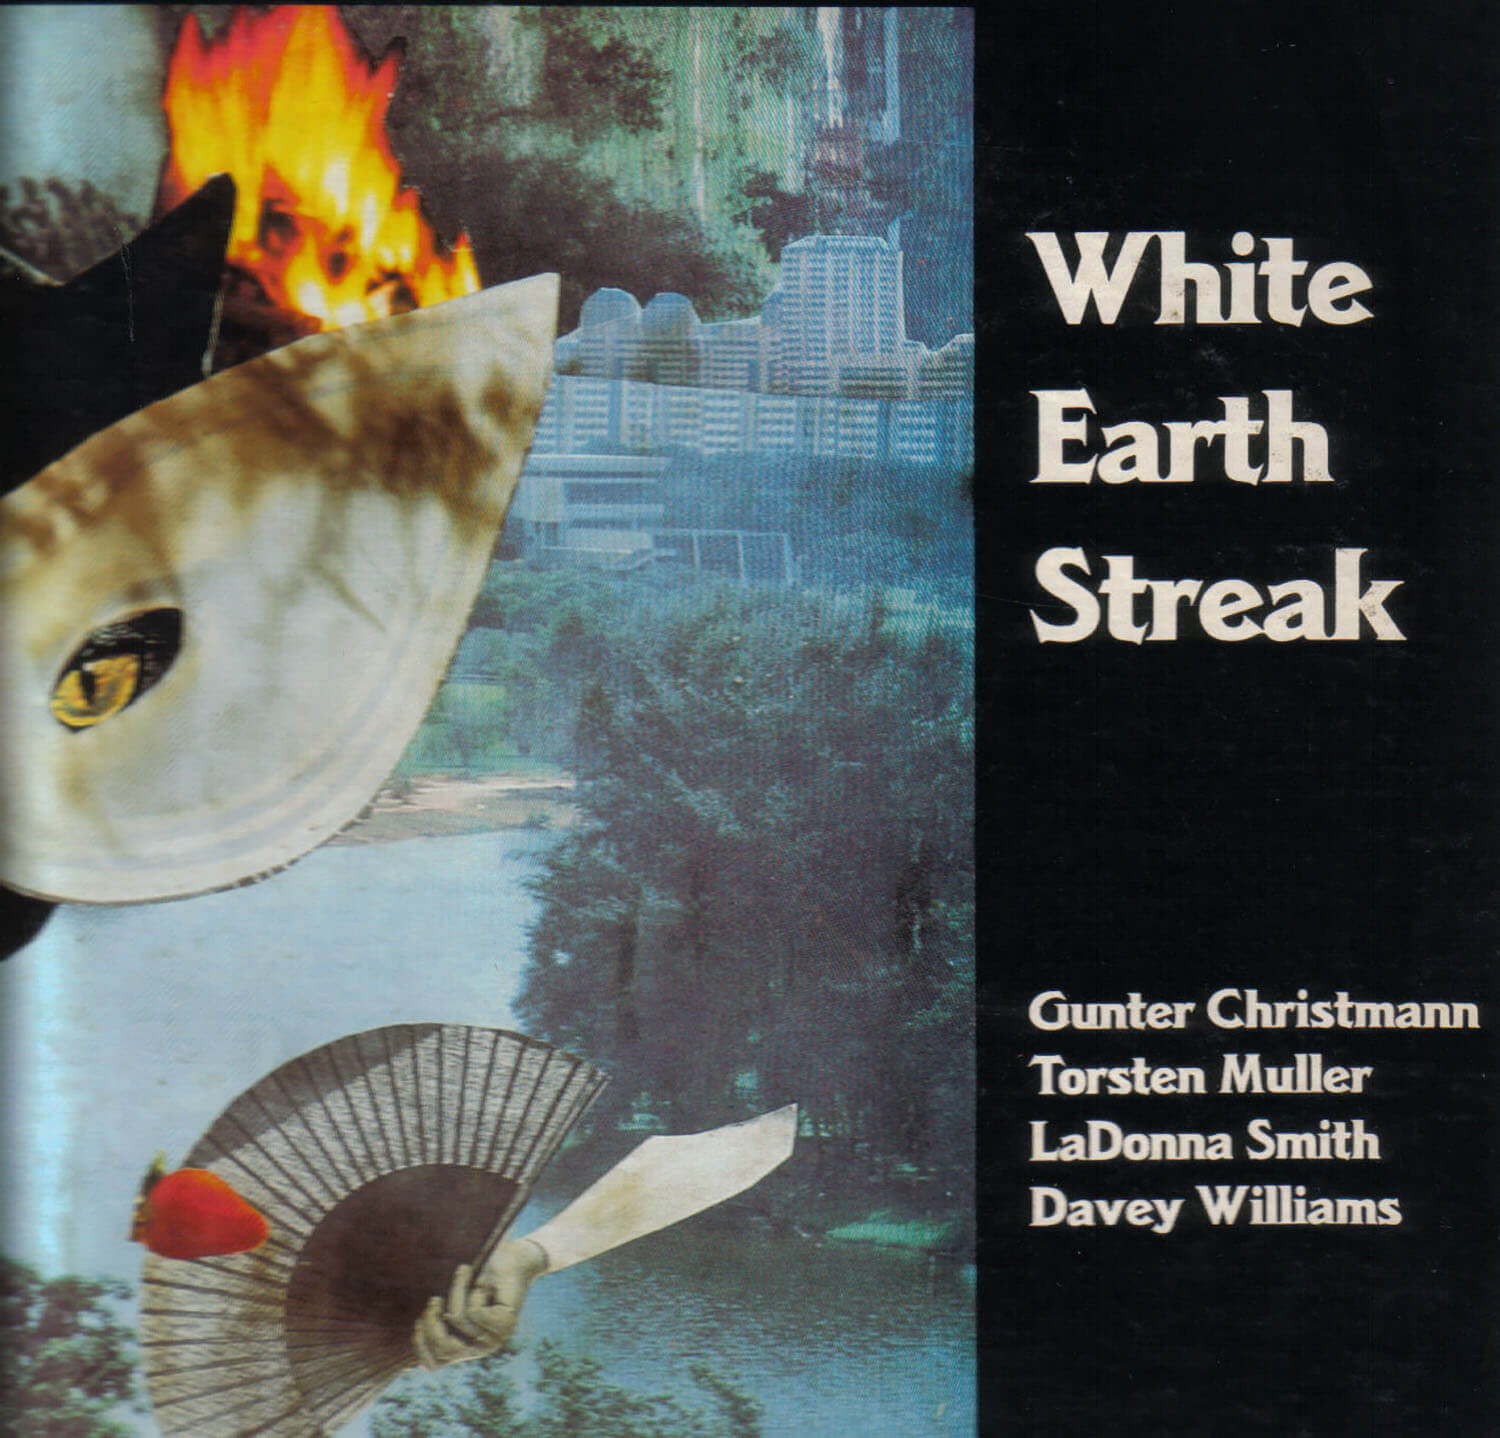 White Earth Streak